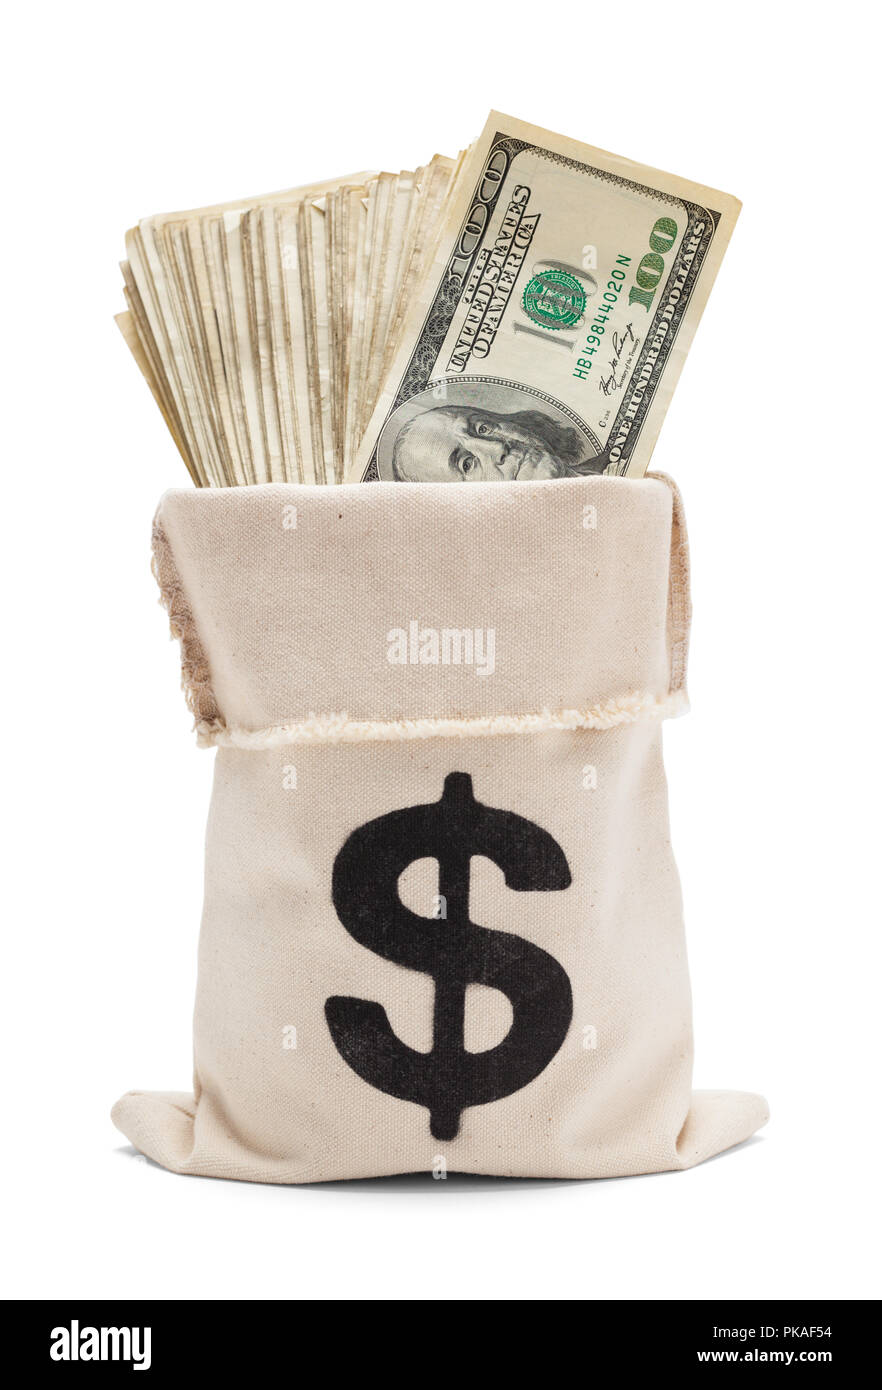 Bank Bag Full of Cash Isolated on White Stock Photo - Alamy